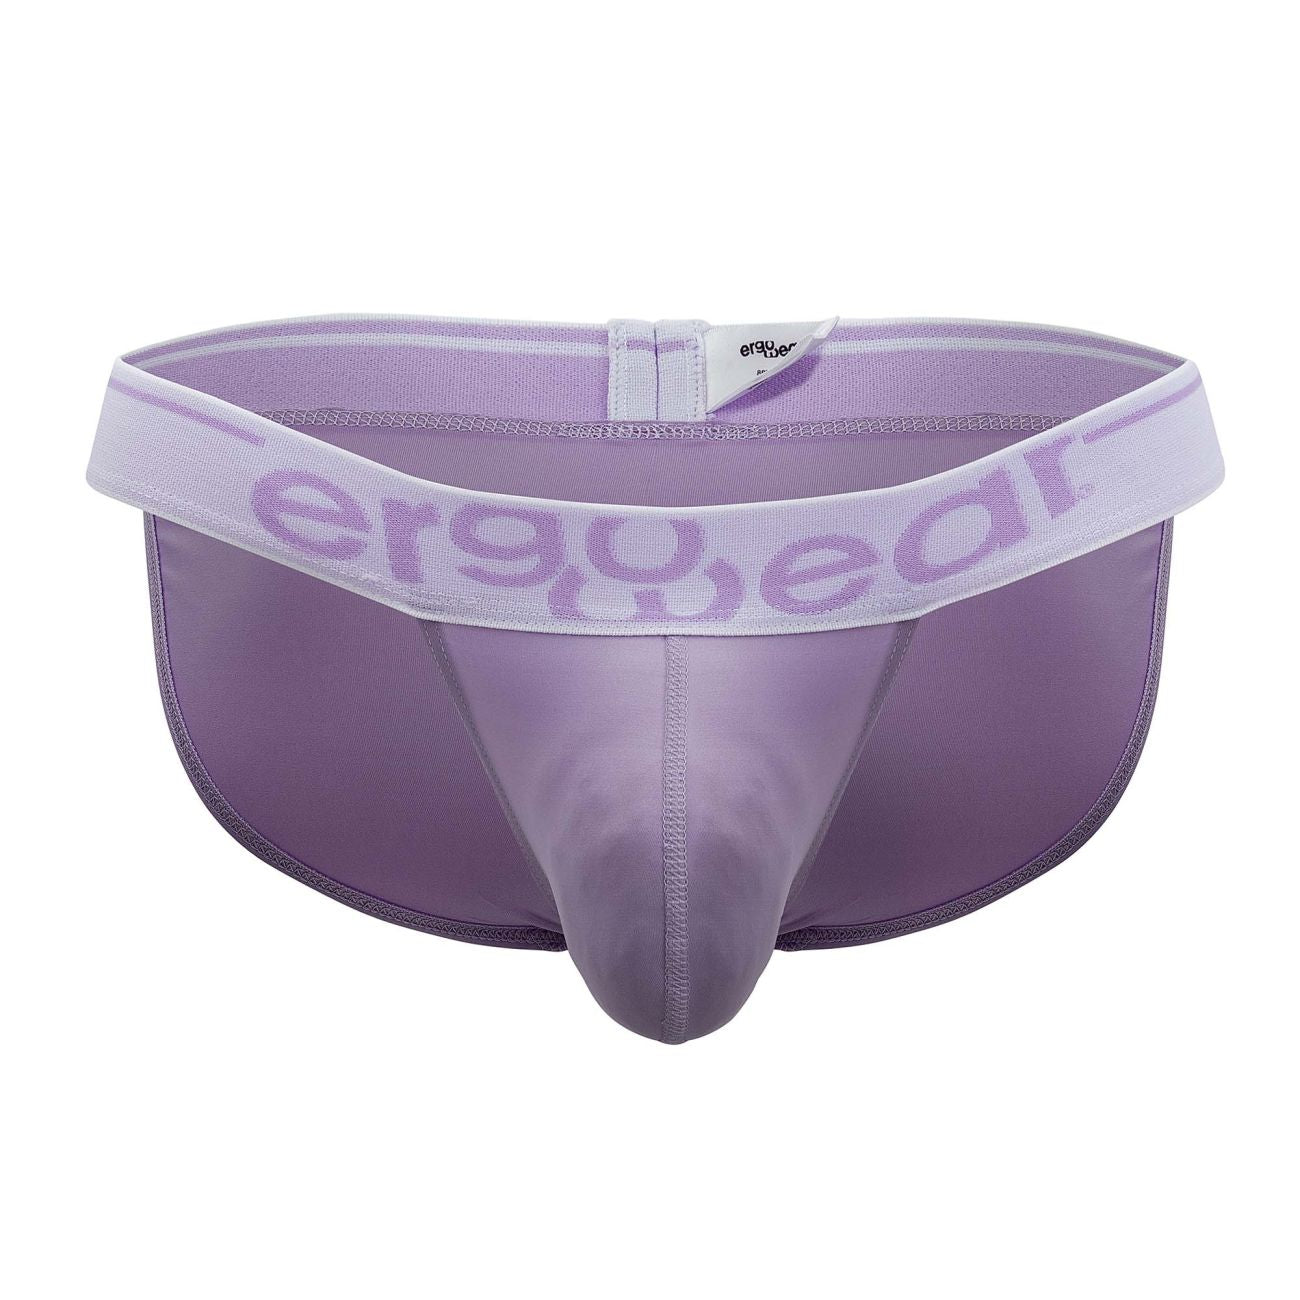 ErgoWear EW1304 MAX SE Bikini Lilac